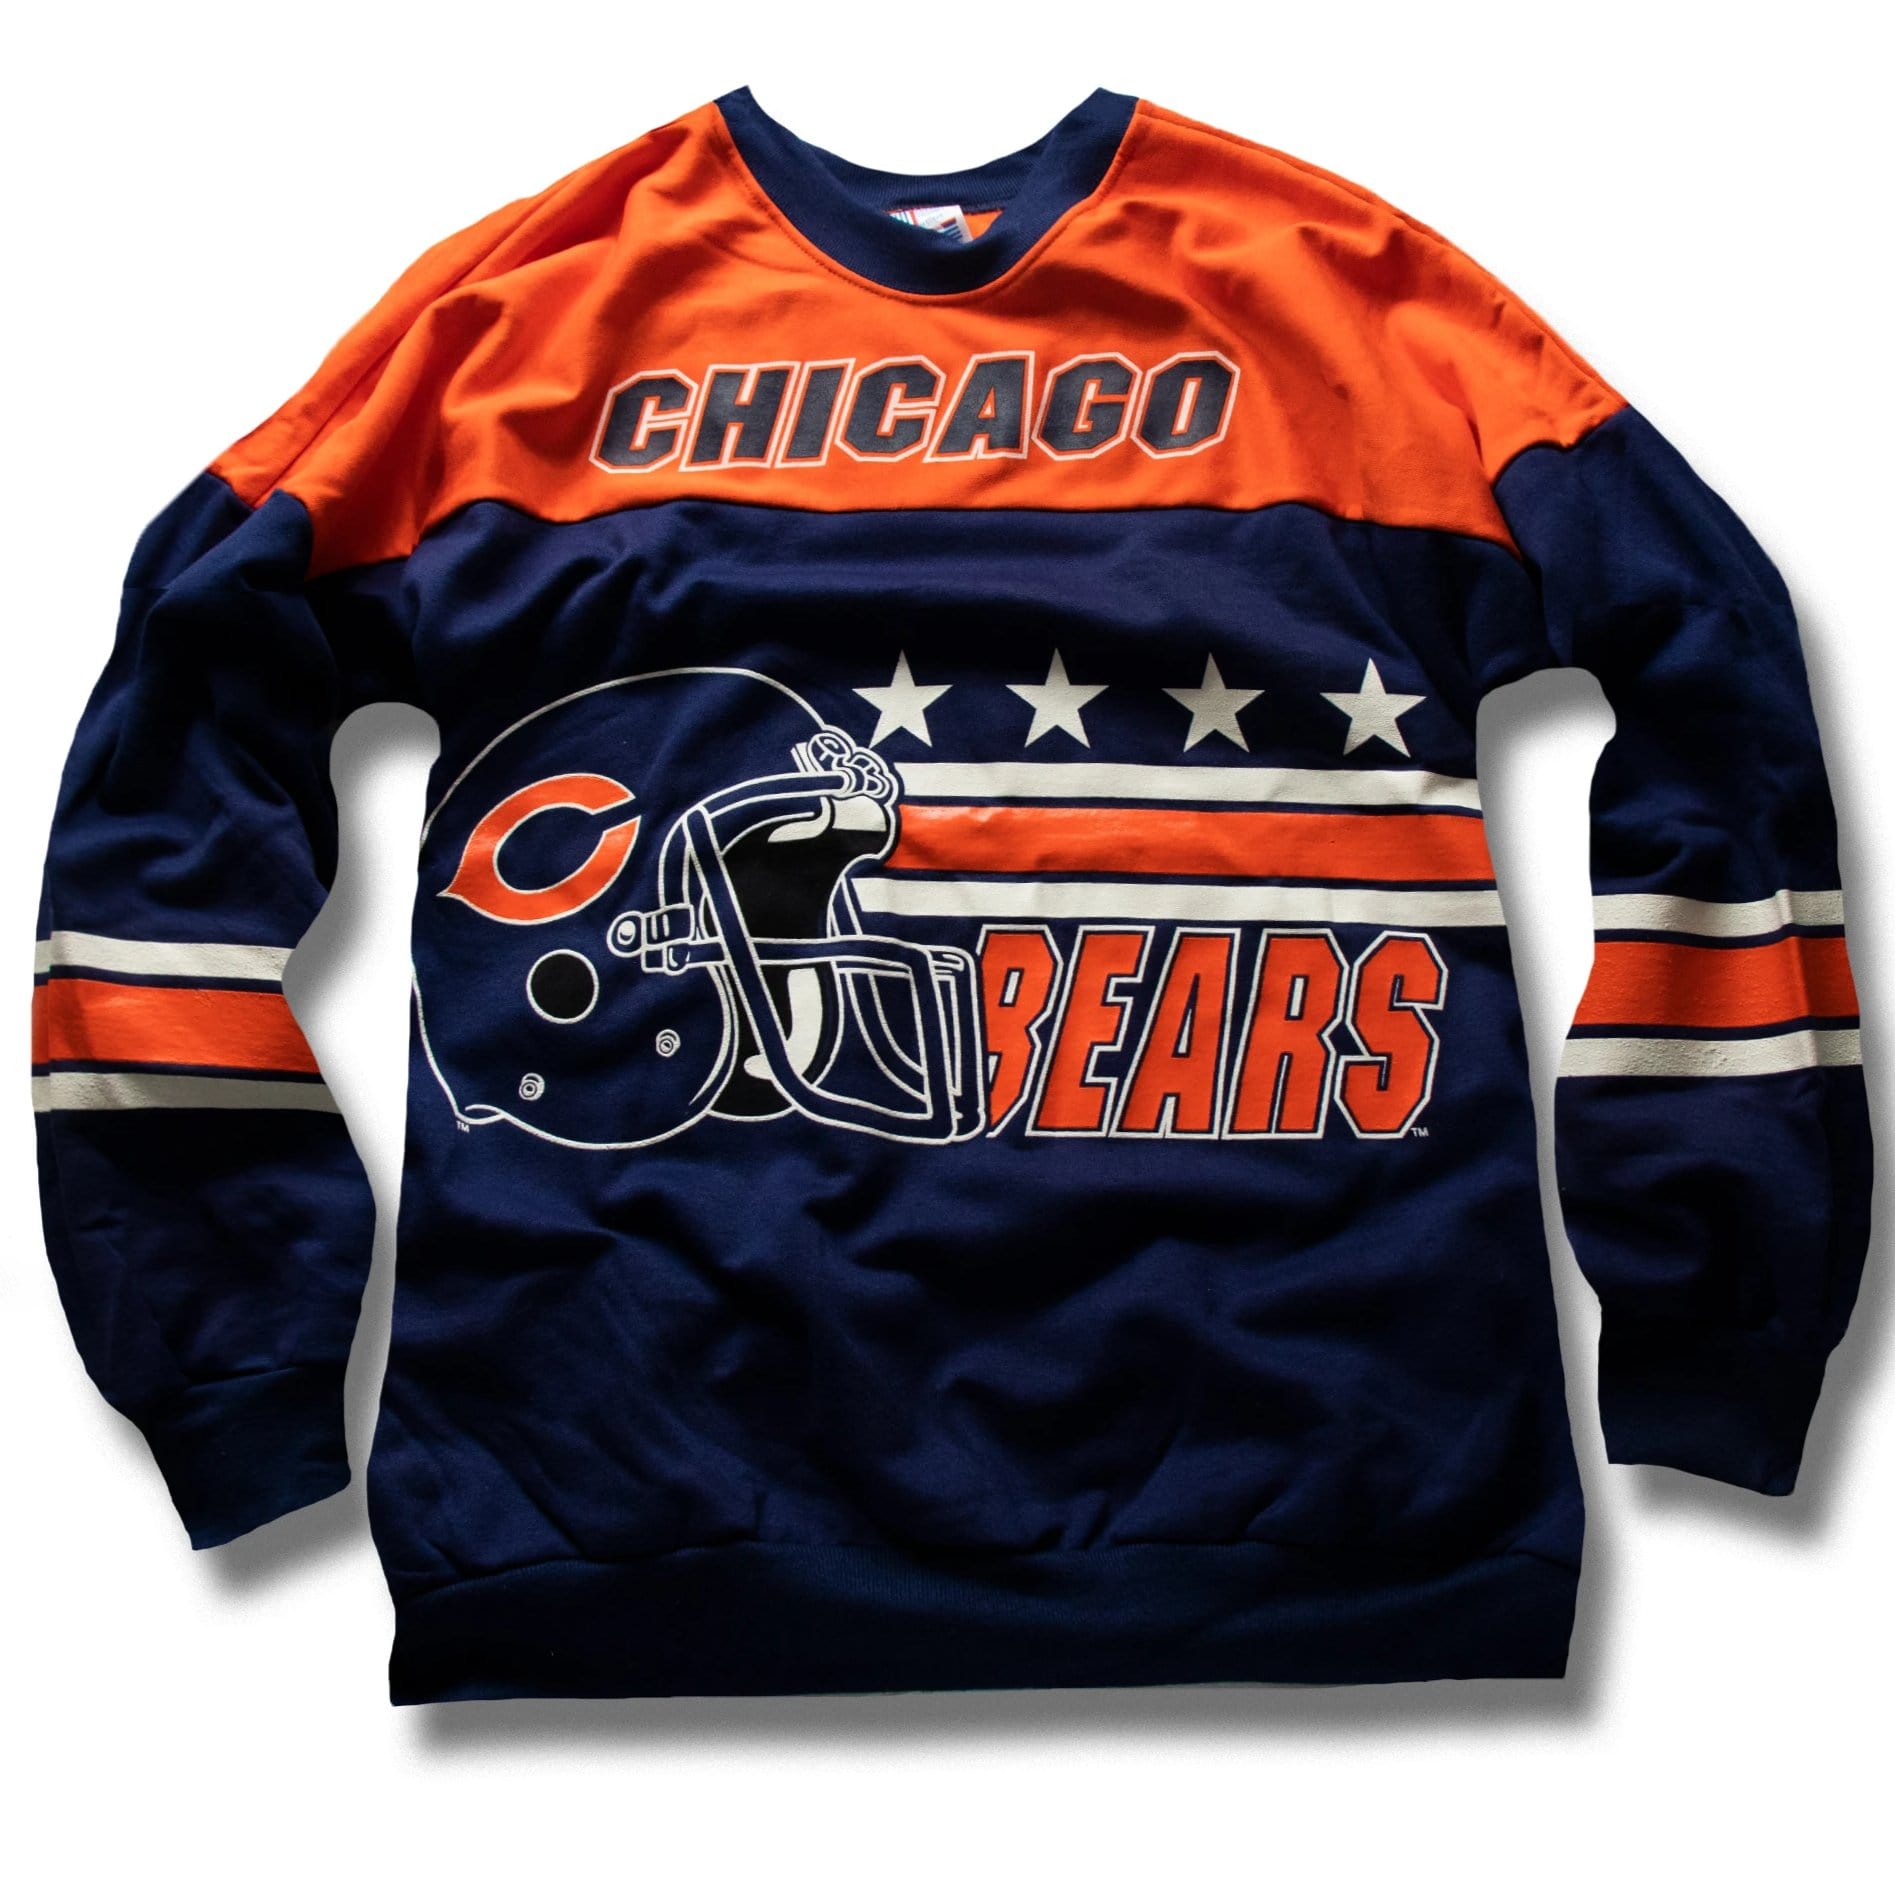 Vintage Chicago Bears Sweatshirt 1980's